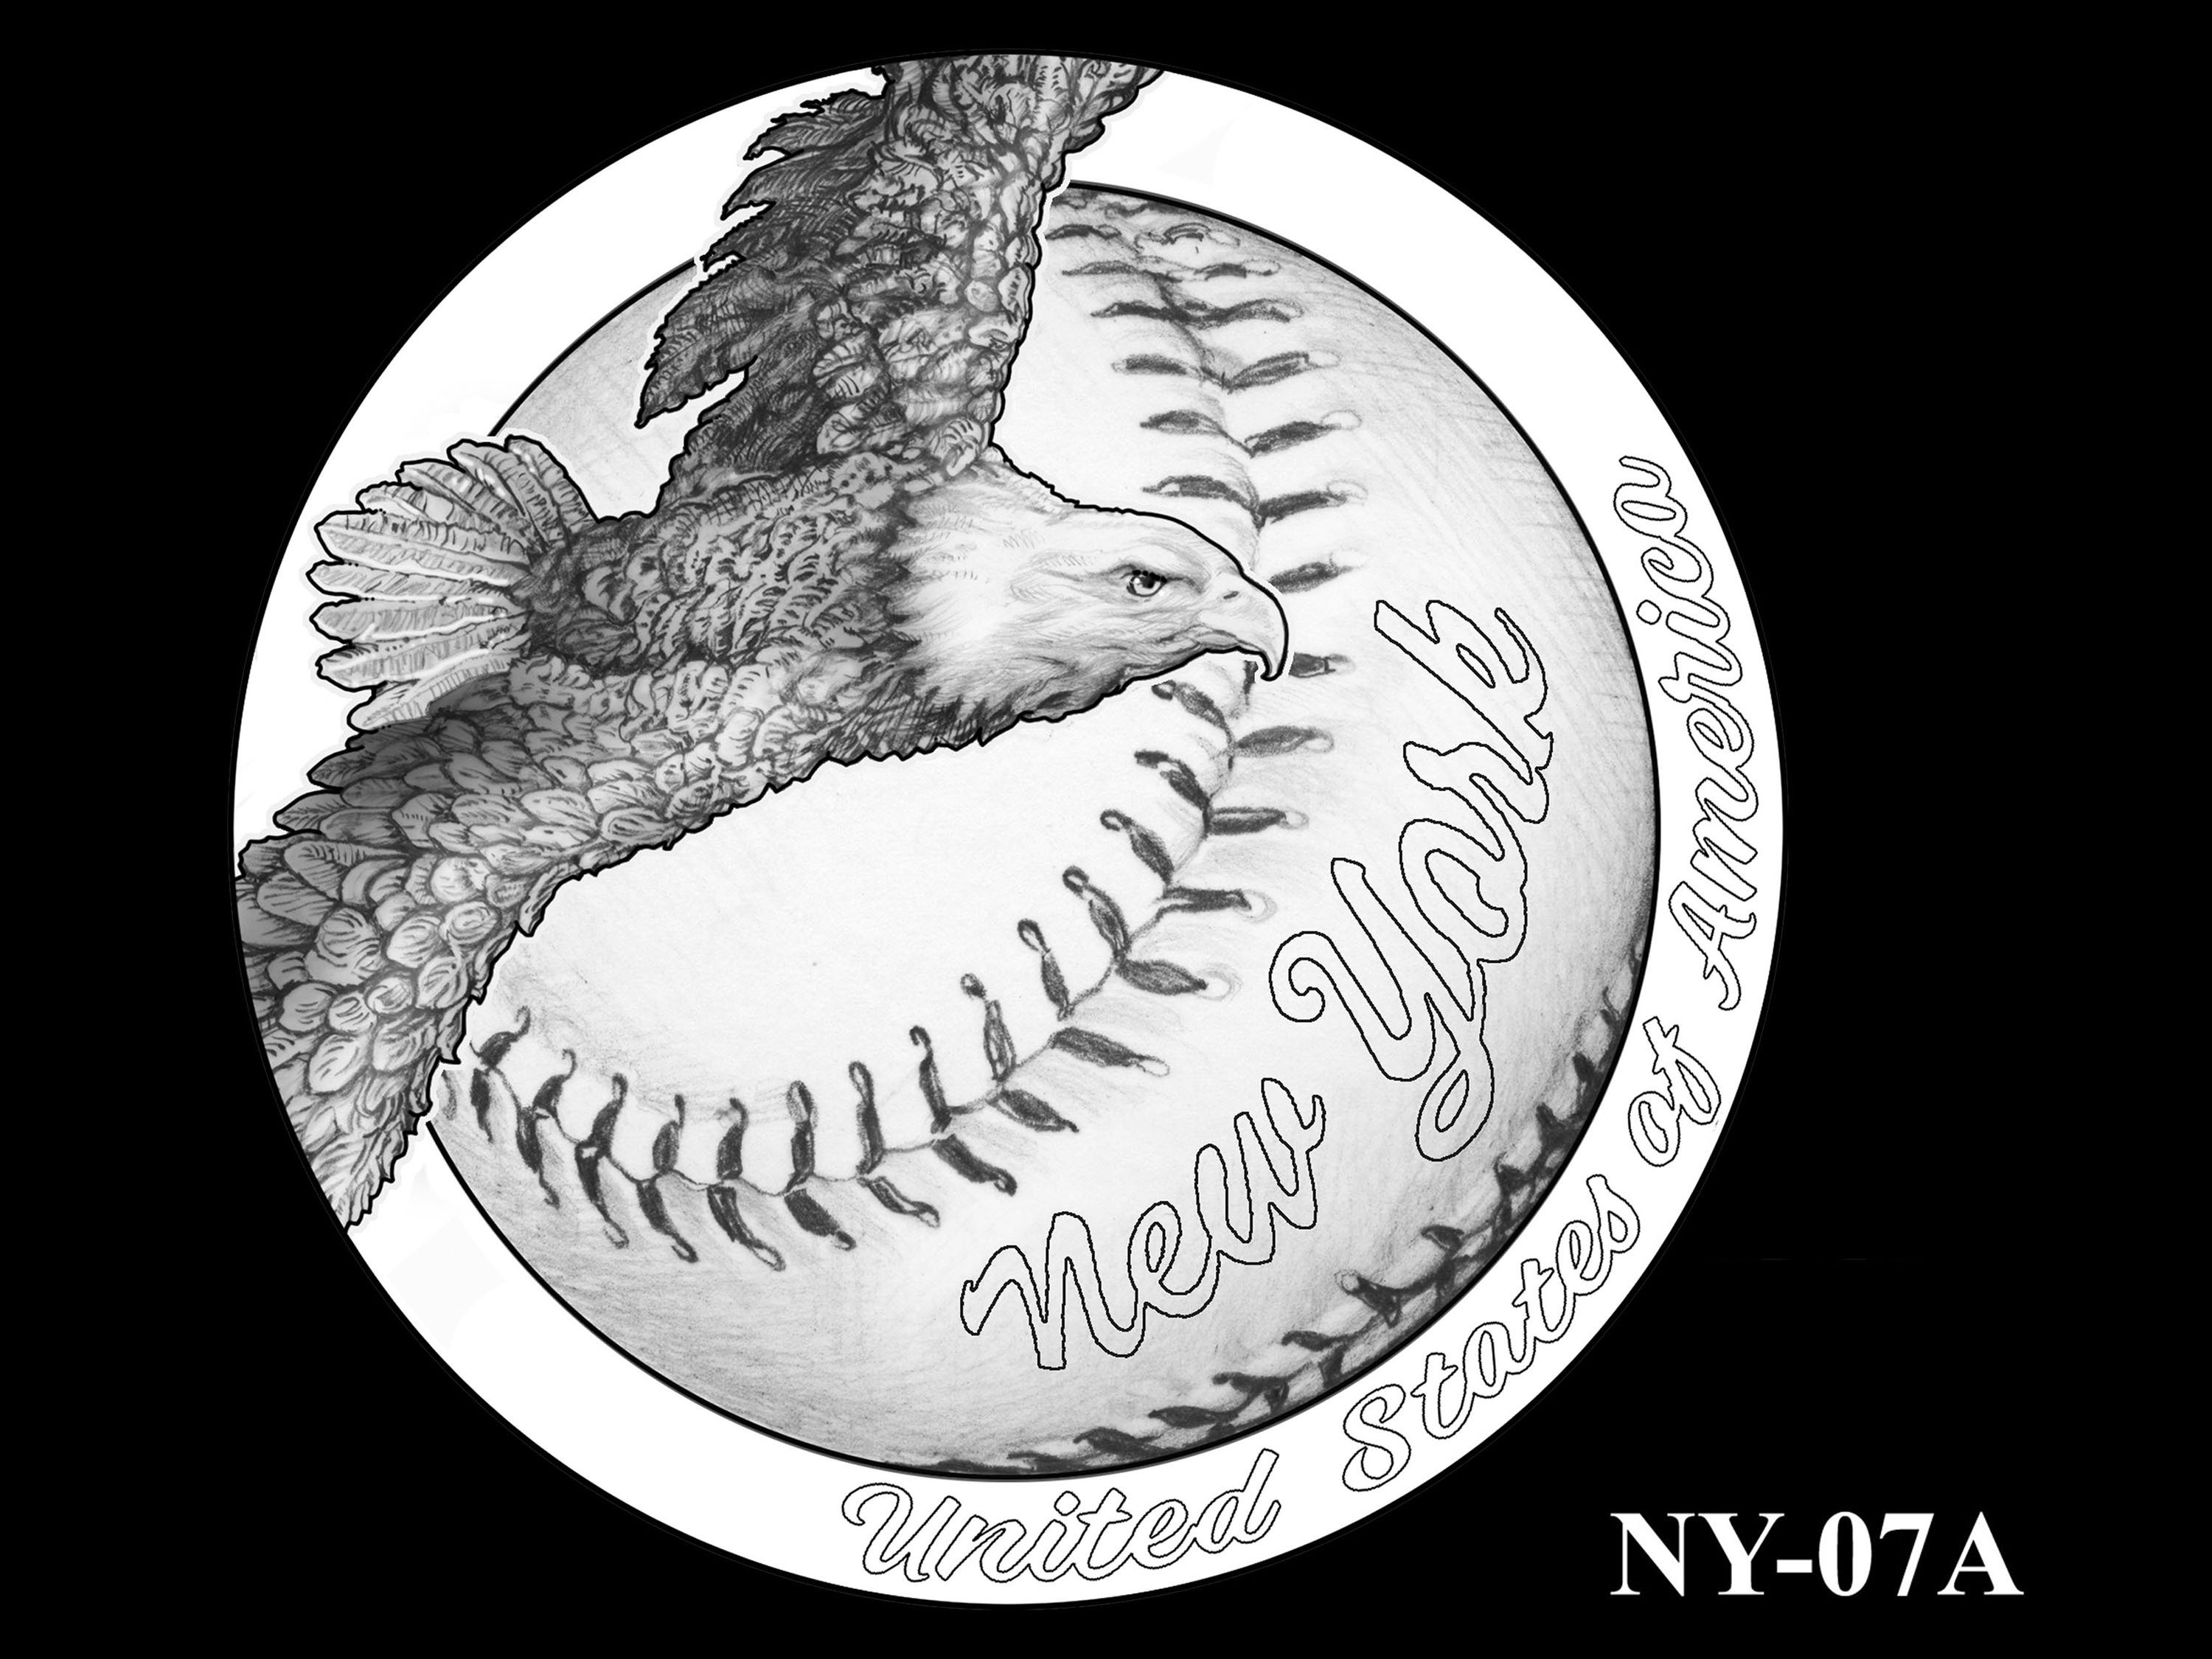 NY-07A -- 2021 American Innovation $1 Coin - New York